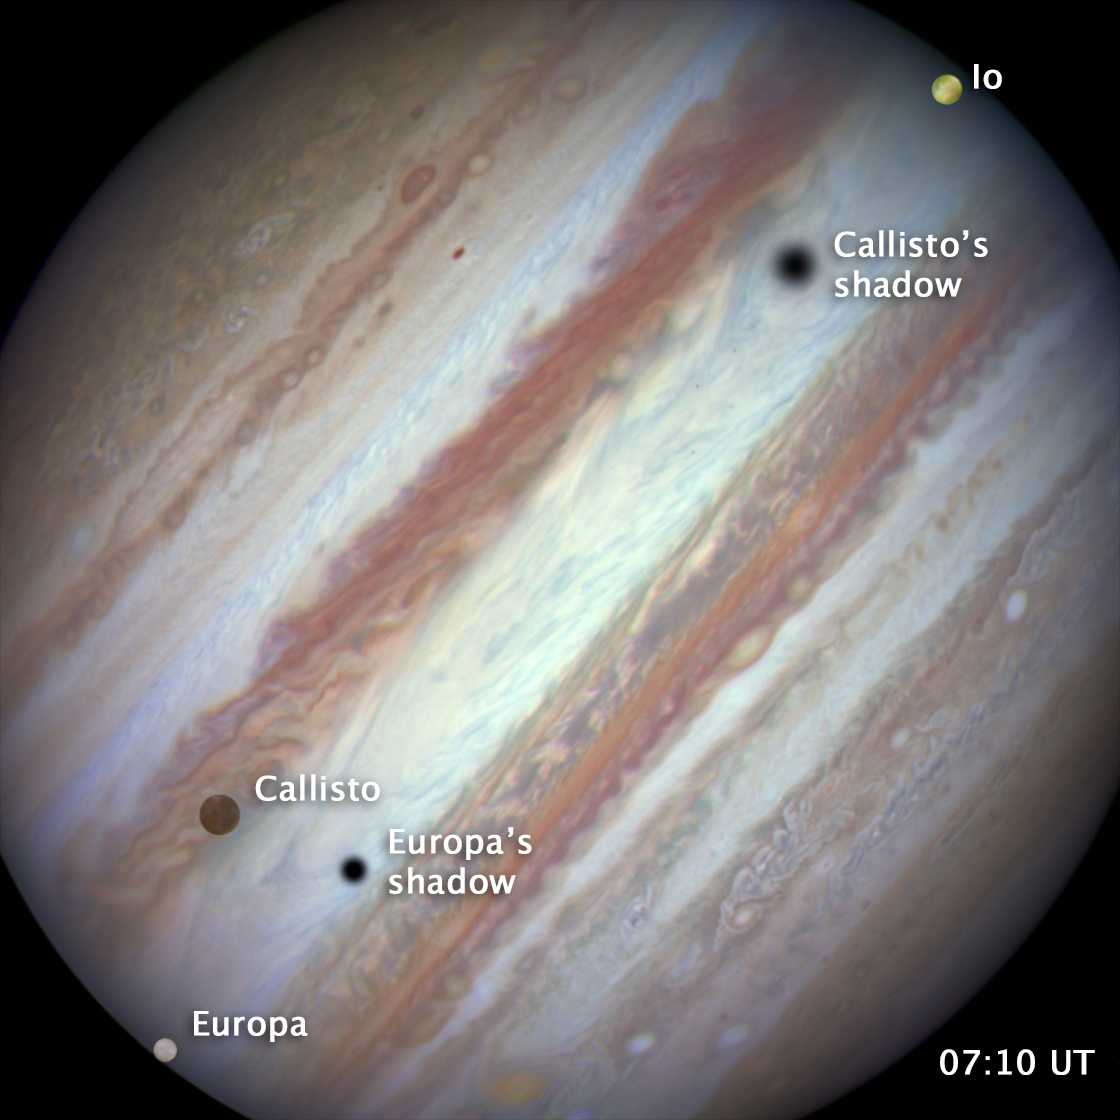 Image of Jupiter with three moons, Europa, Callisto and Io